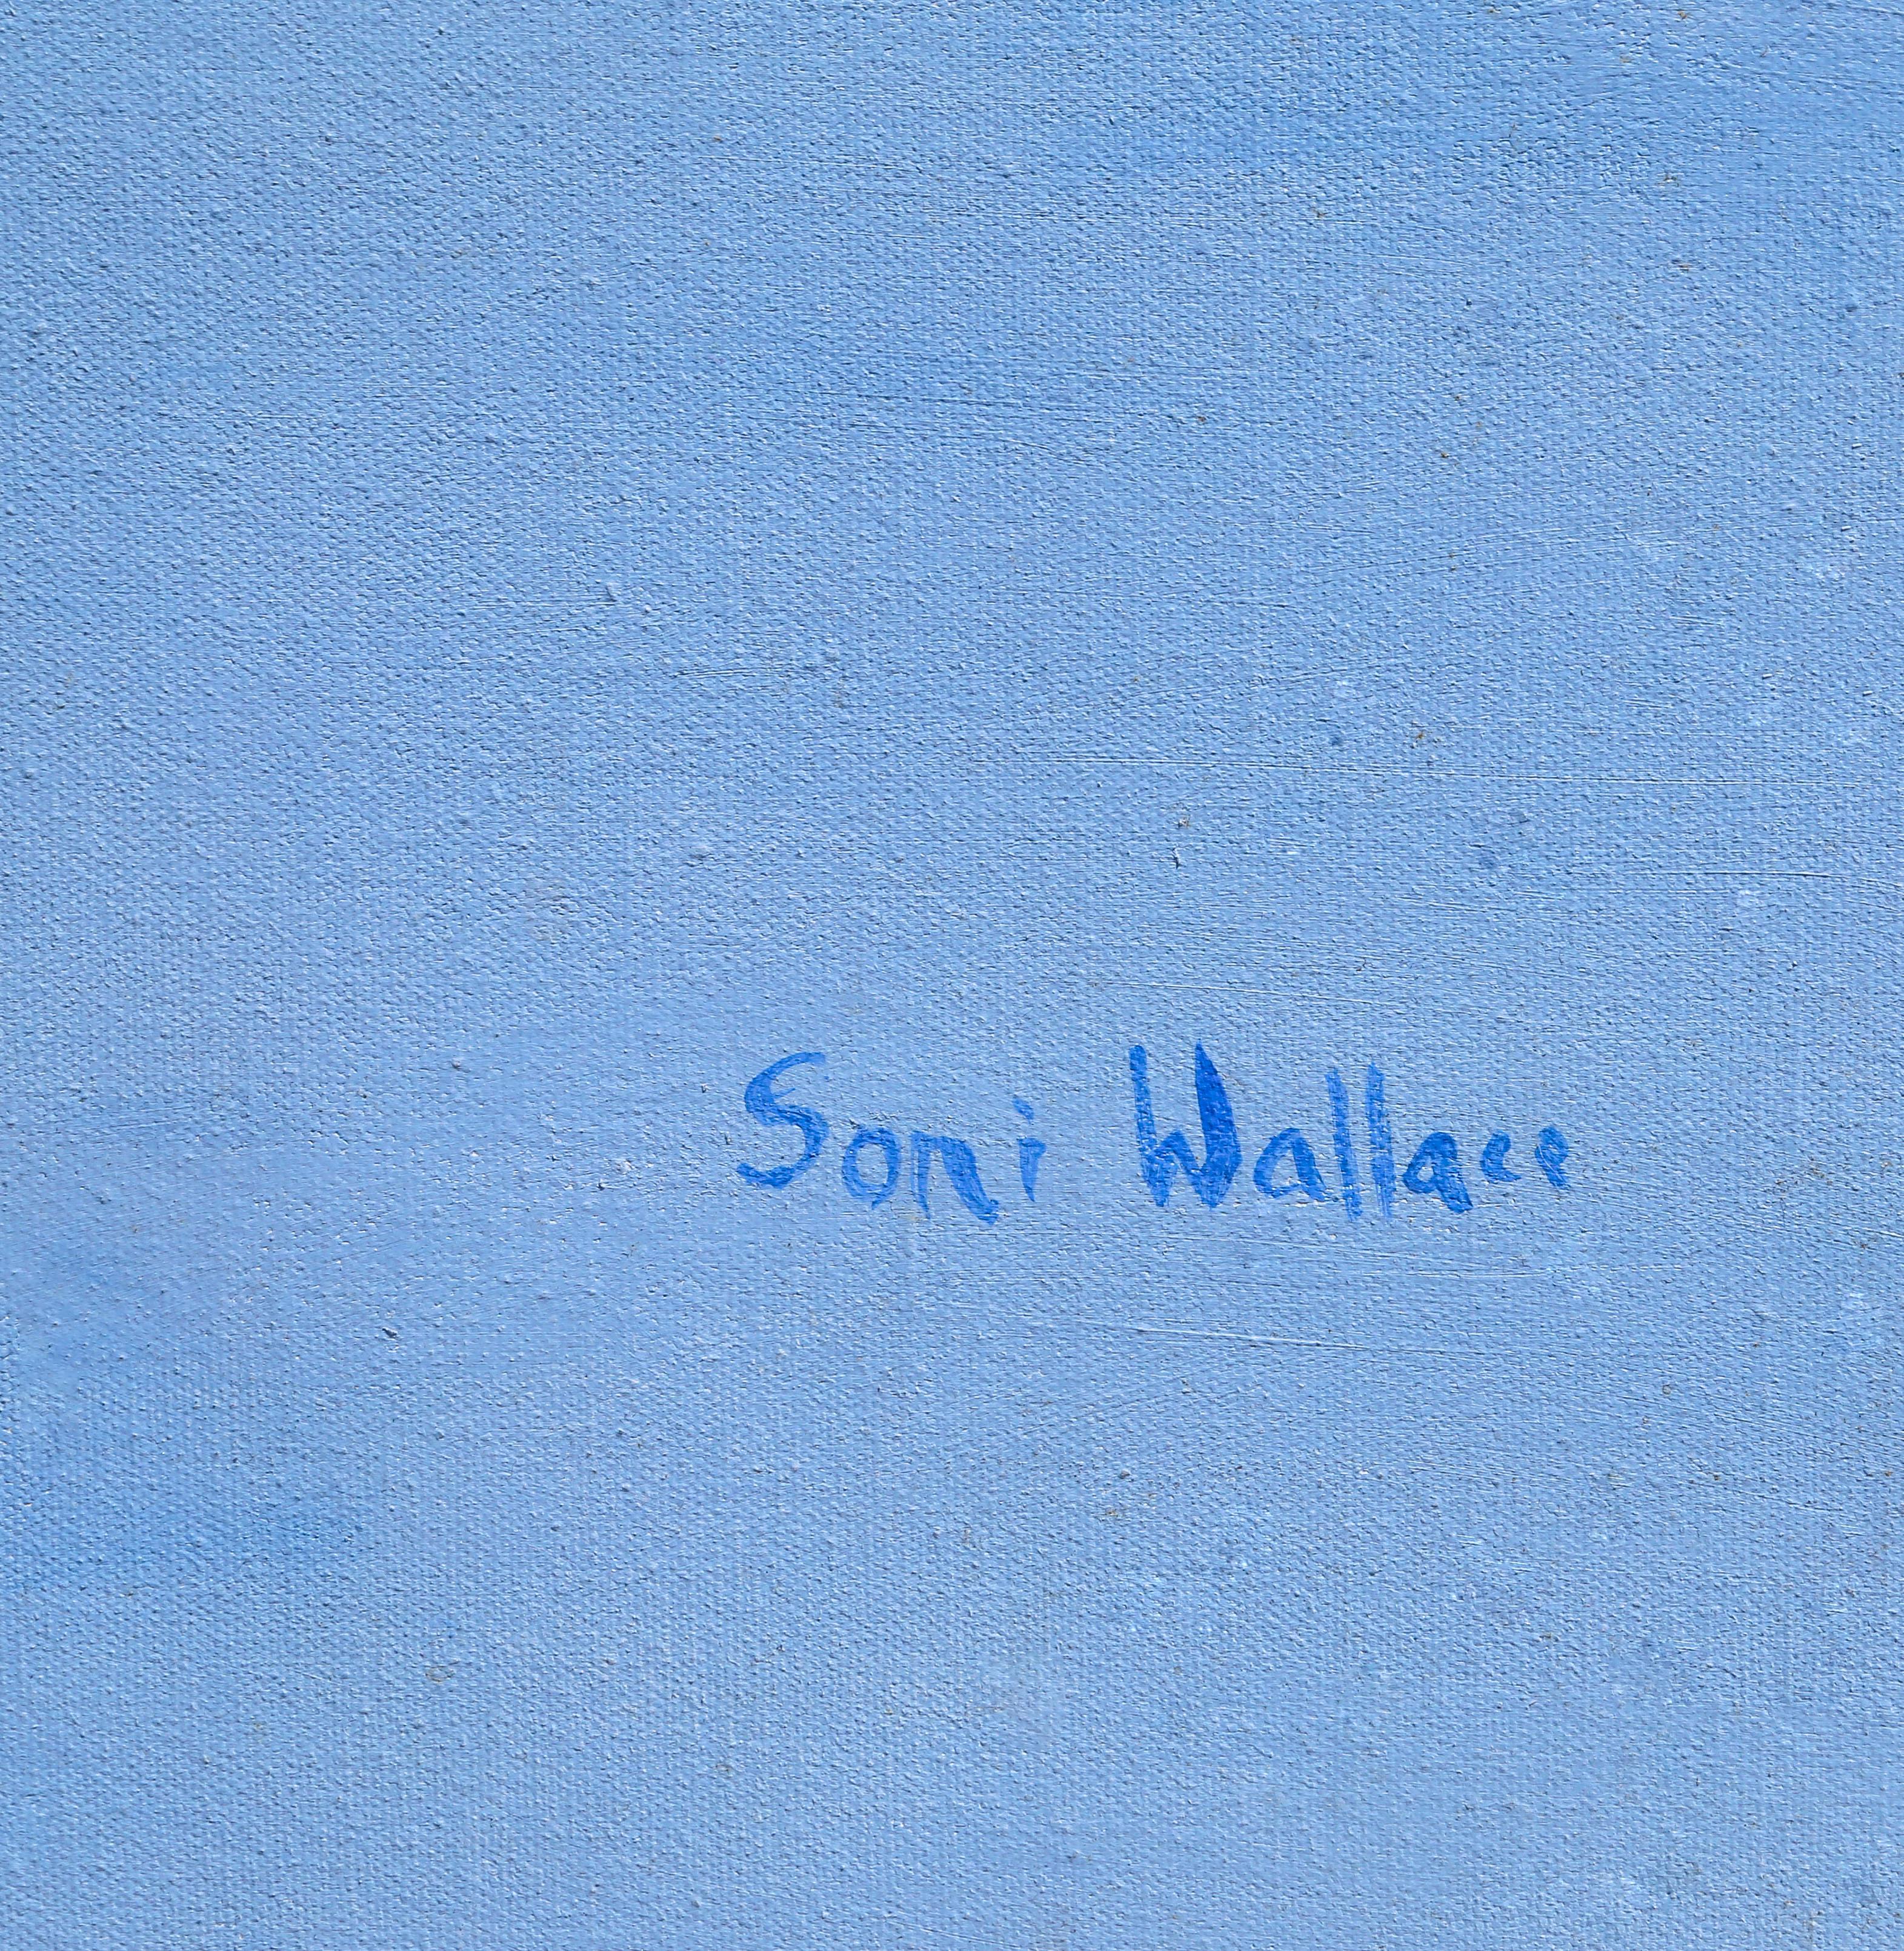 Serenity in Blau (Abstrakter Expressionismus), Painting, von Soni Wallace